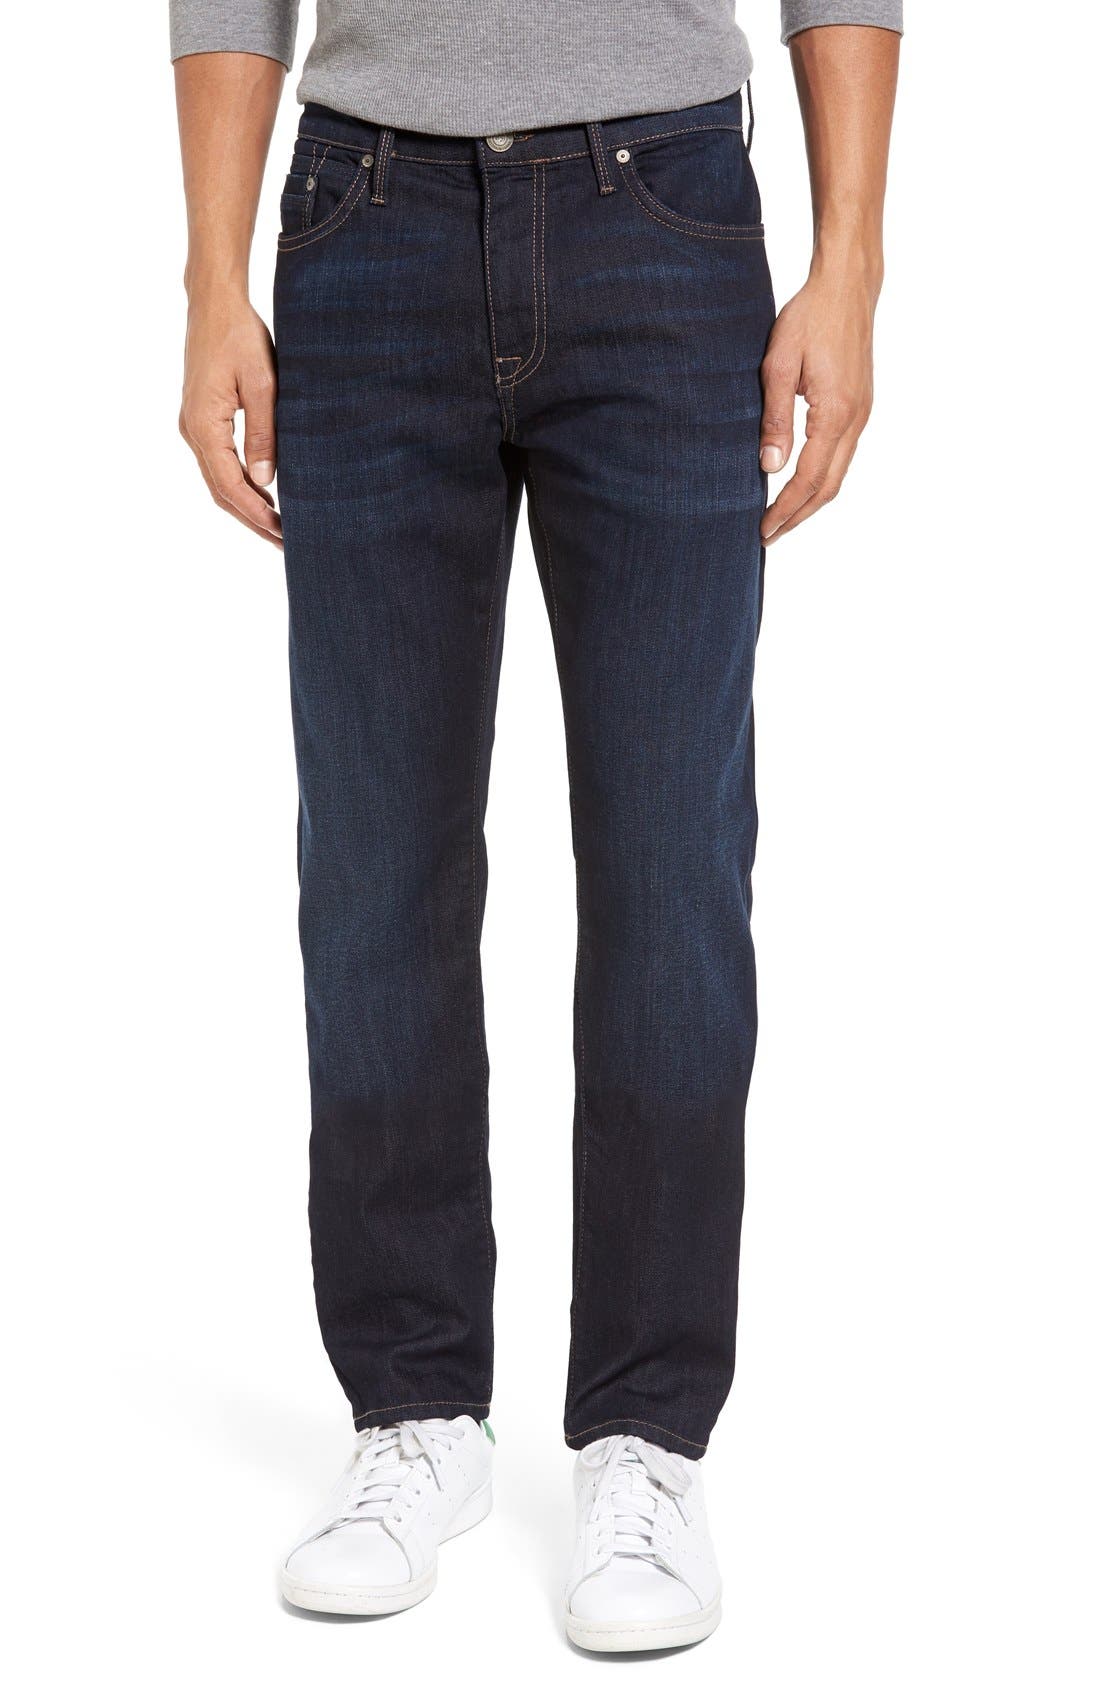 mens dark blue jeans with white stitching